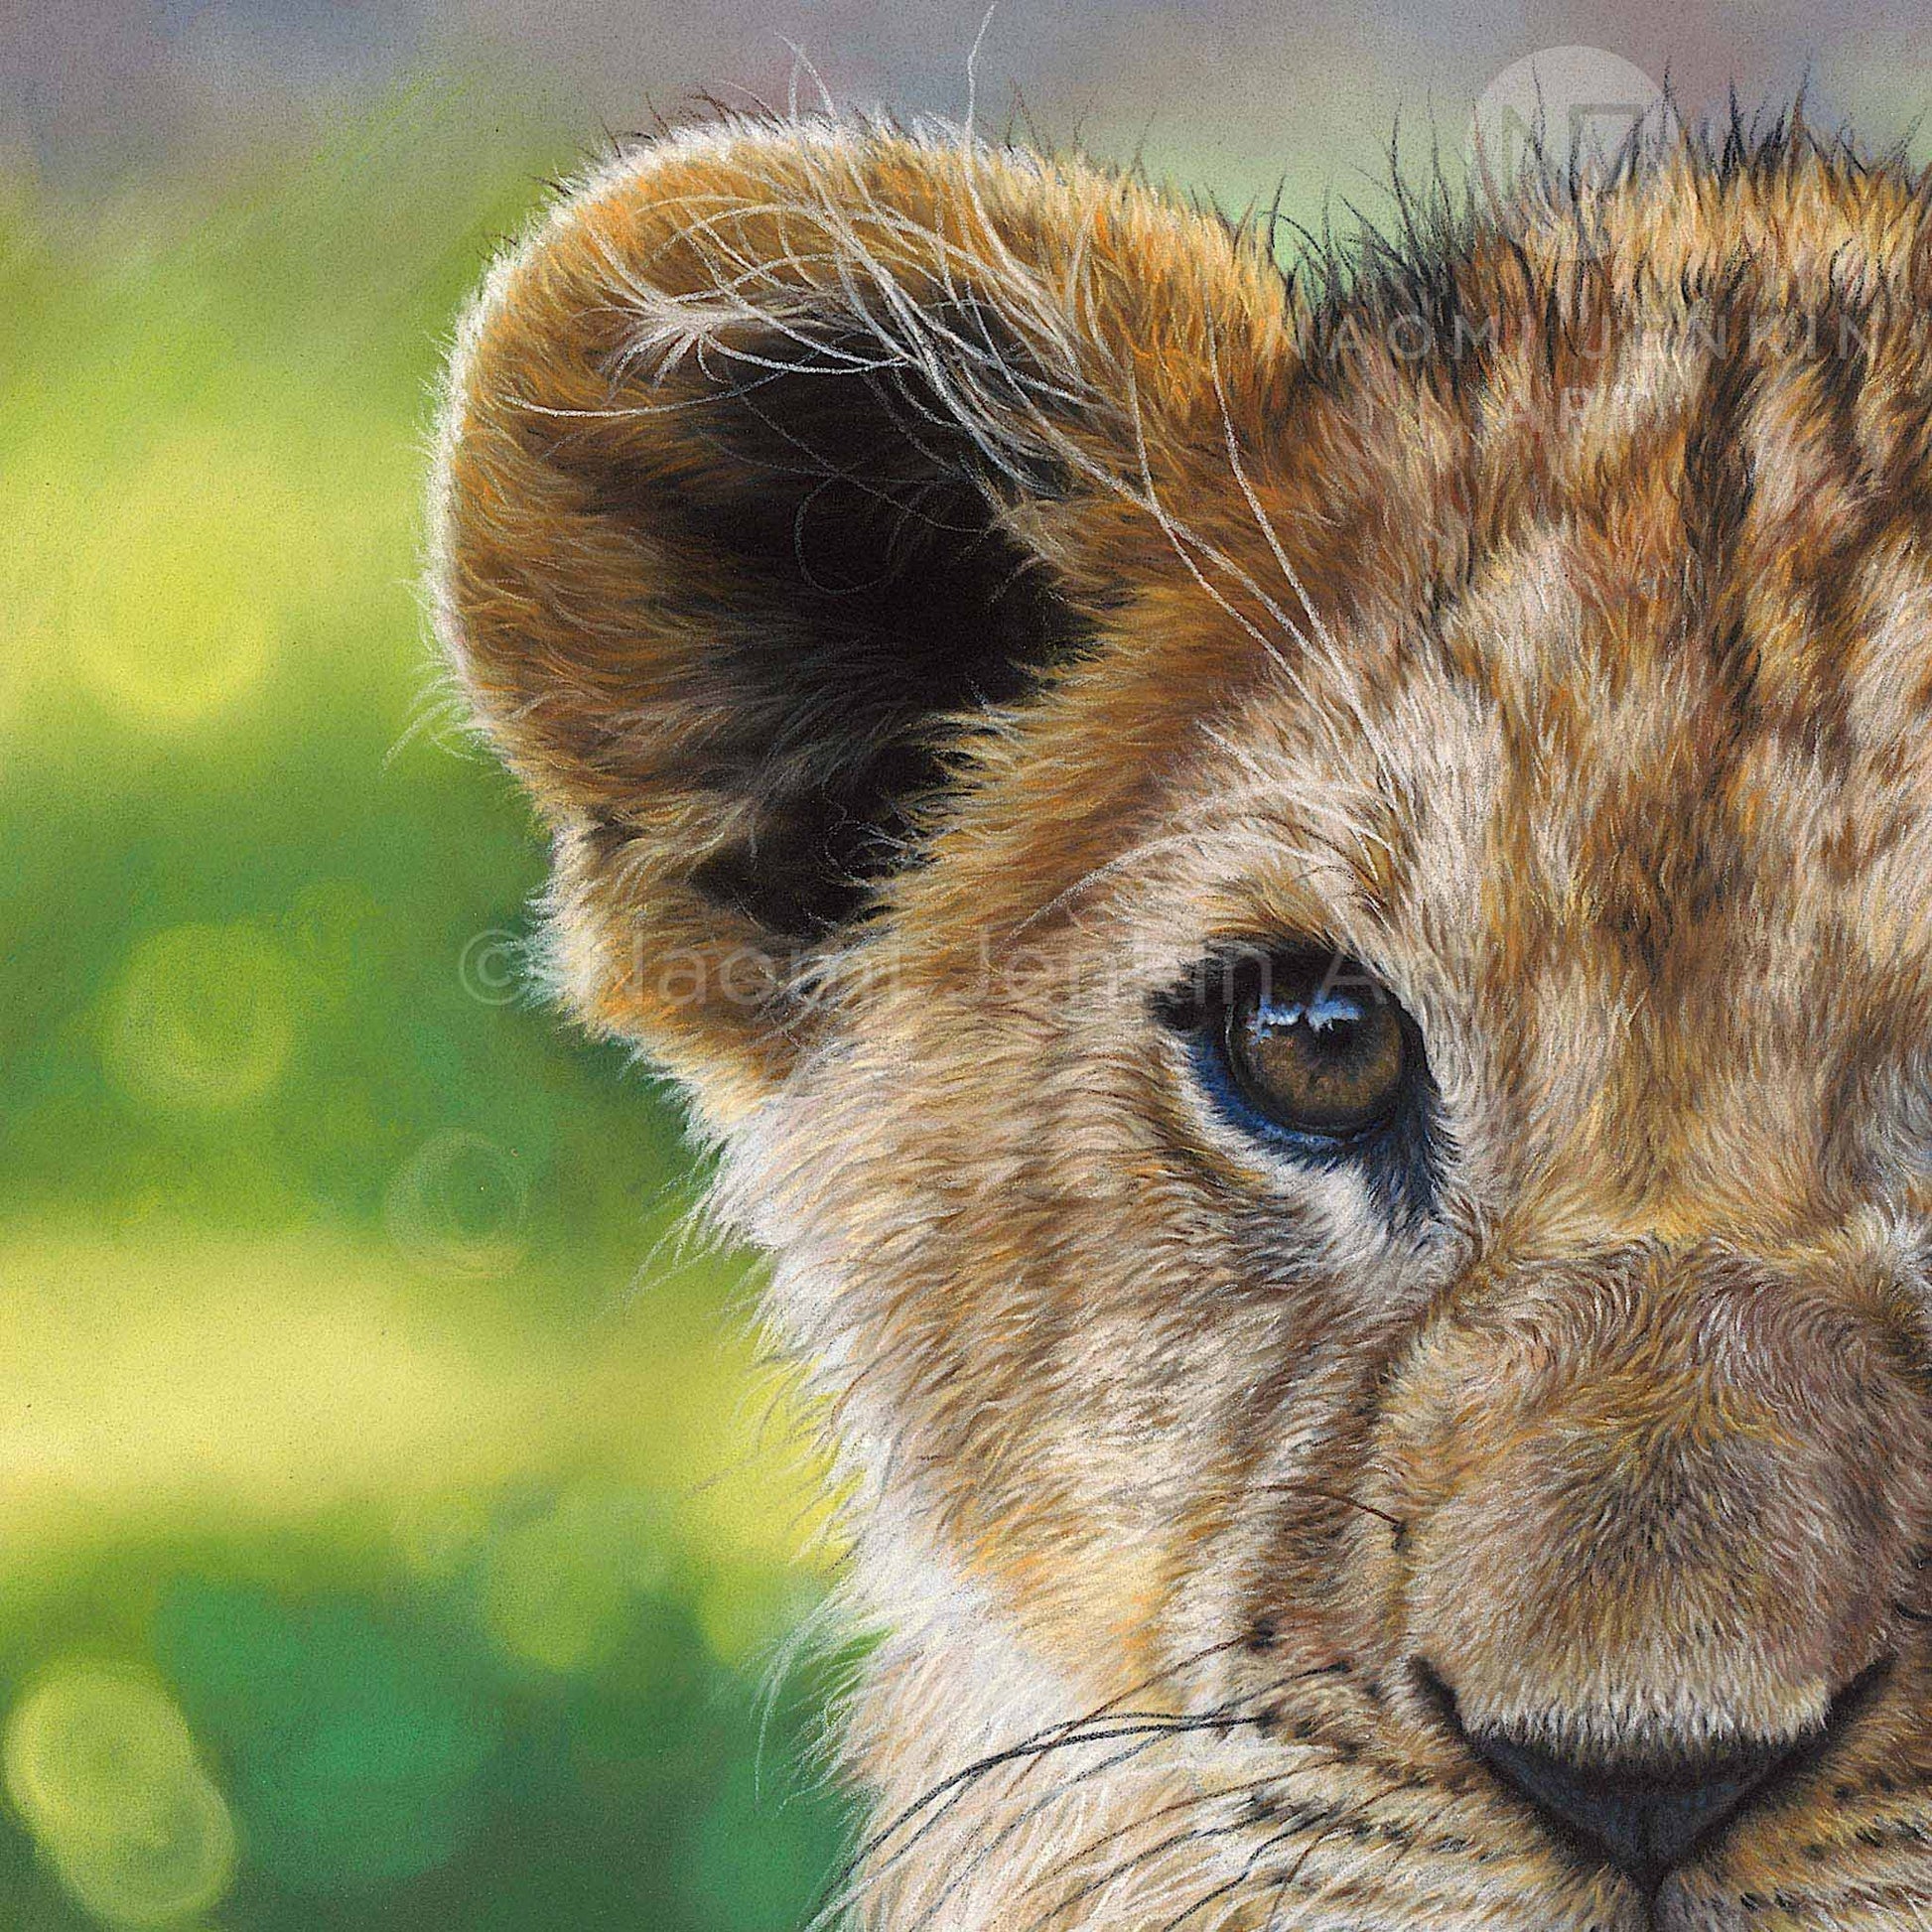 Lion art by wildlife artist Naomi Jenkin. 